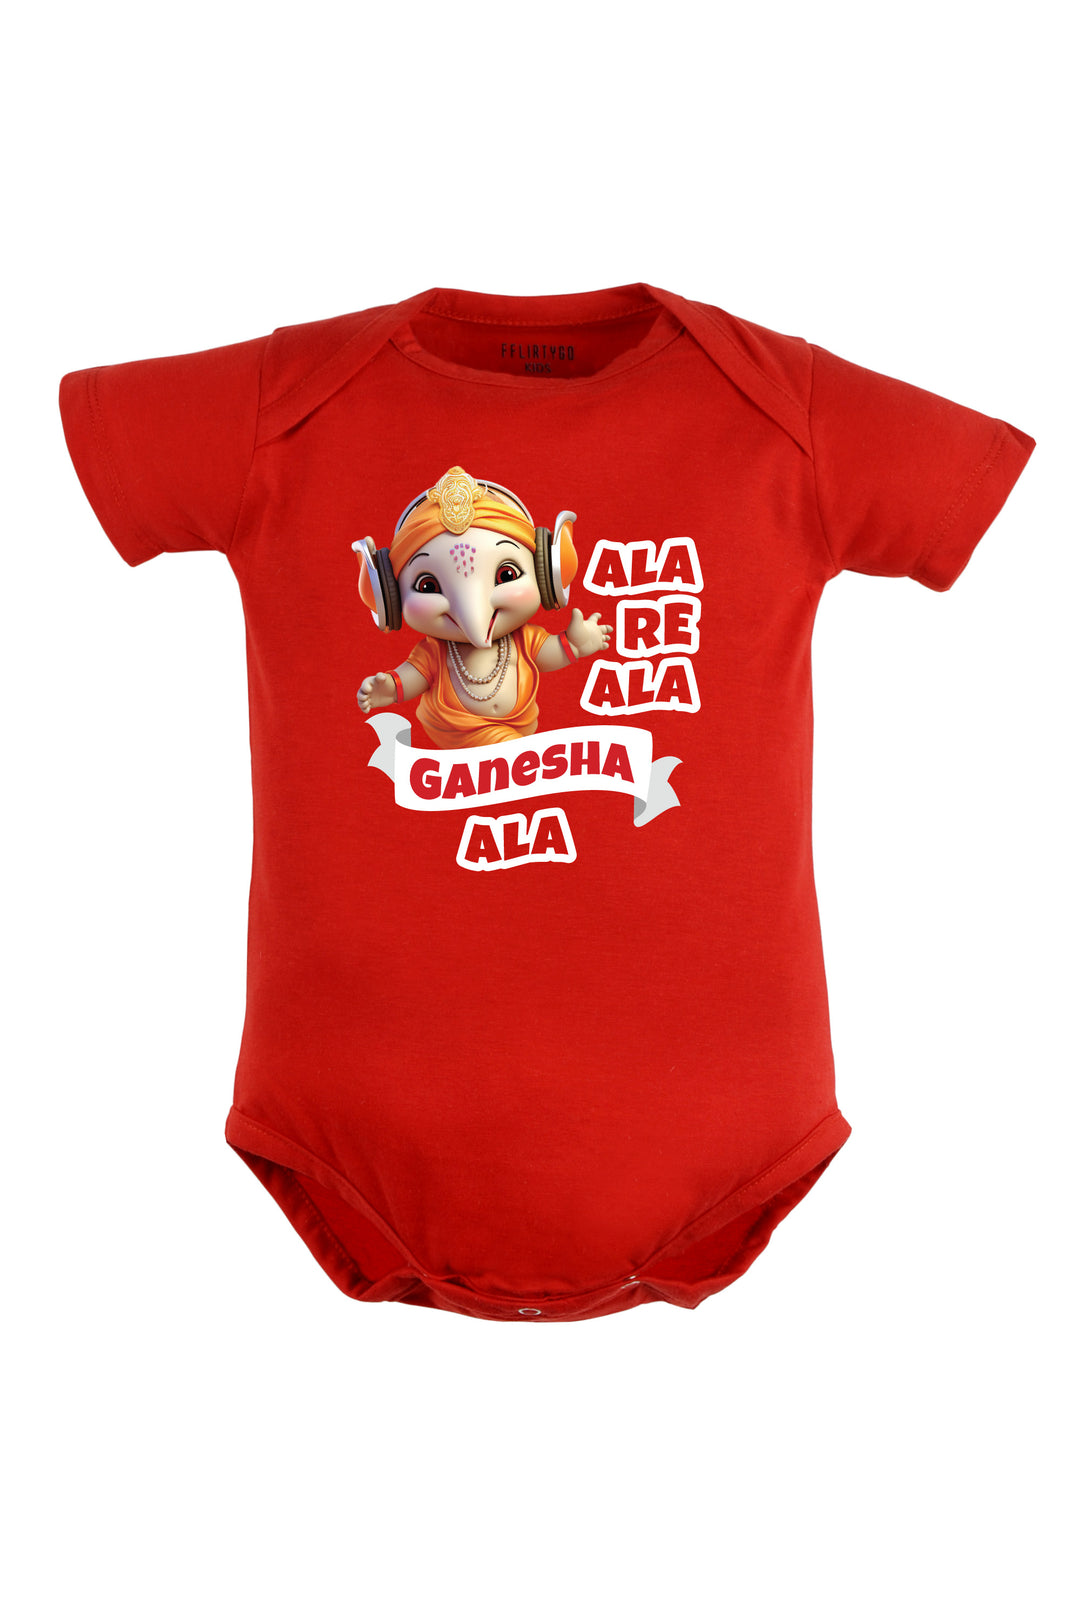 Ala Re Ala Ganesha Ala Baby Romper | Onesies